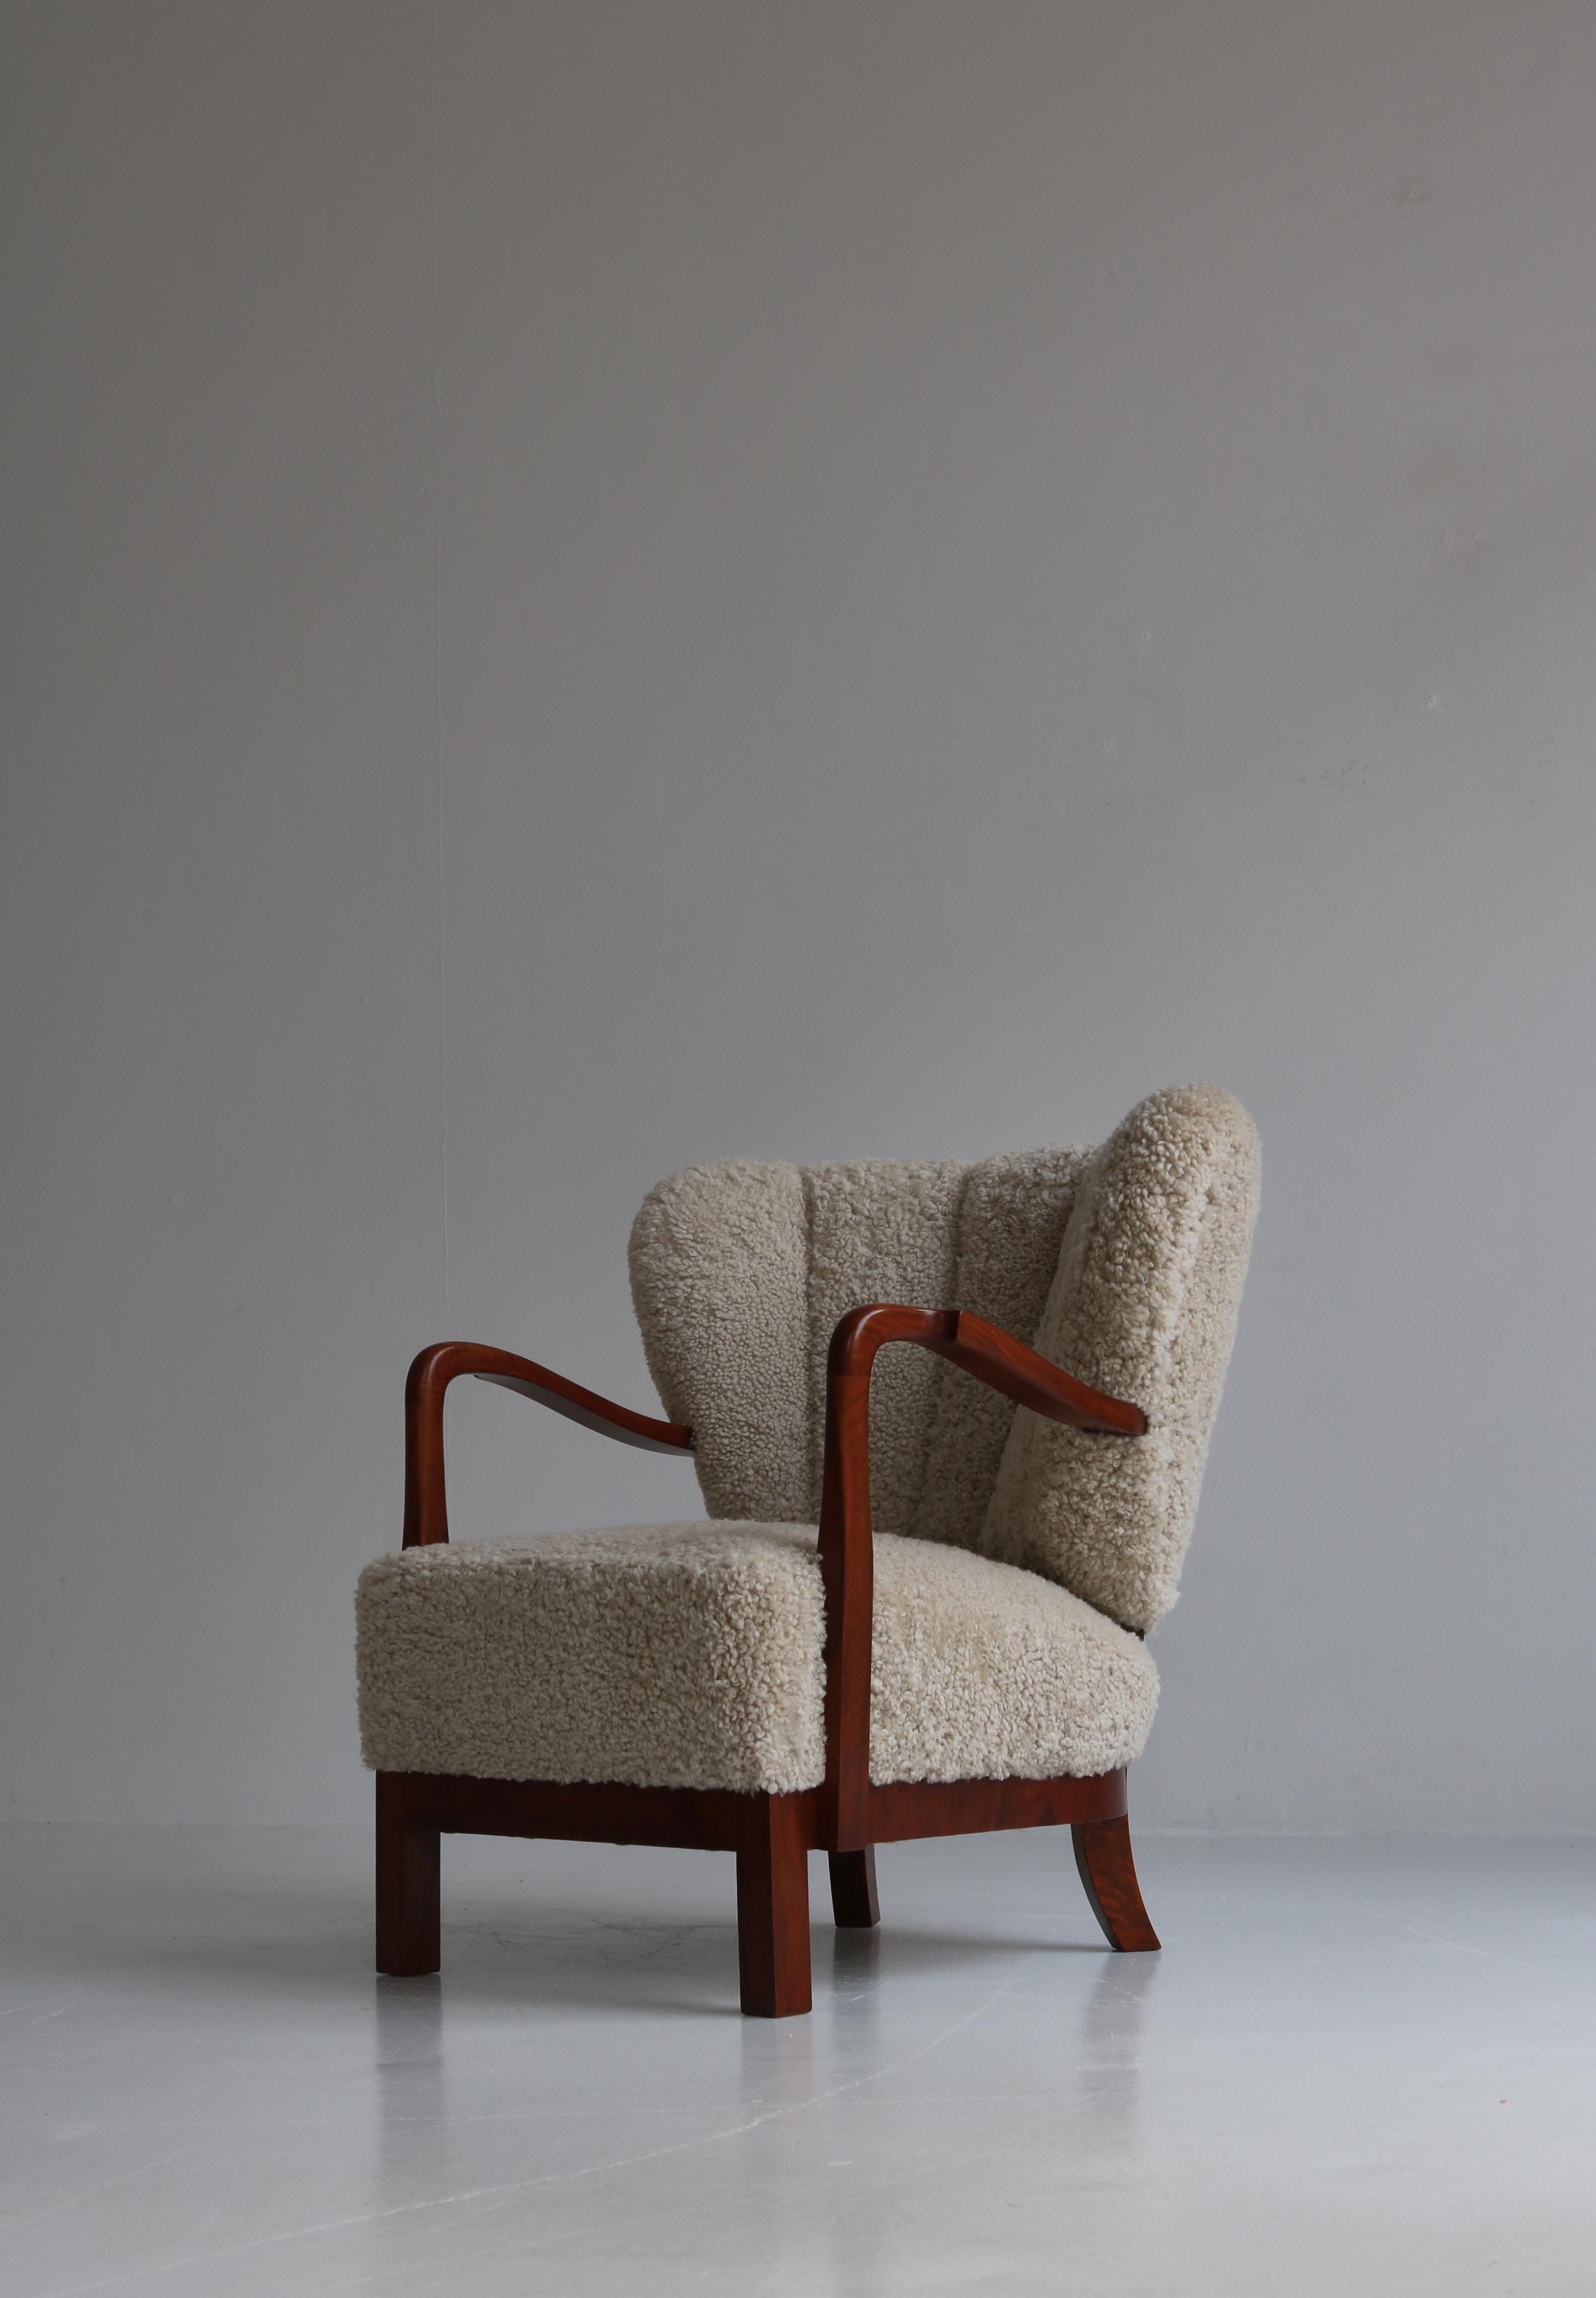 Viggo Boesen Lounge Chairs in Nutwood and Sheepskin, 1930s Danish Modern For Sale 2